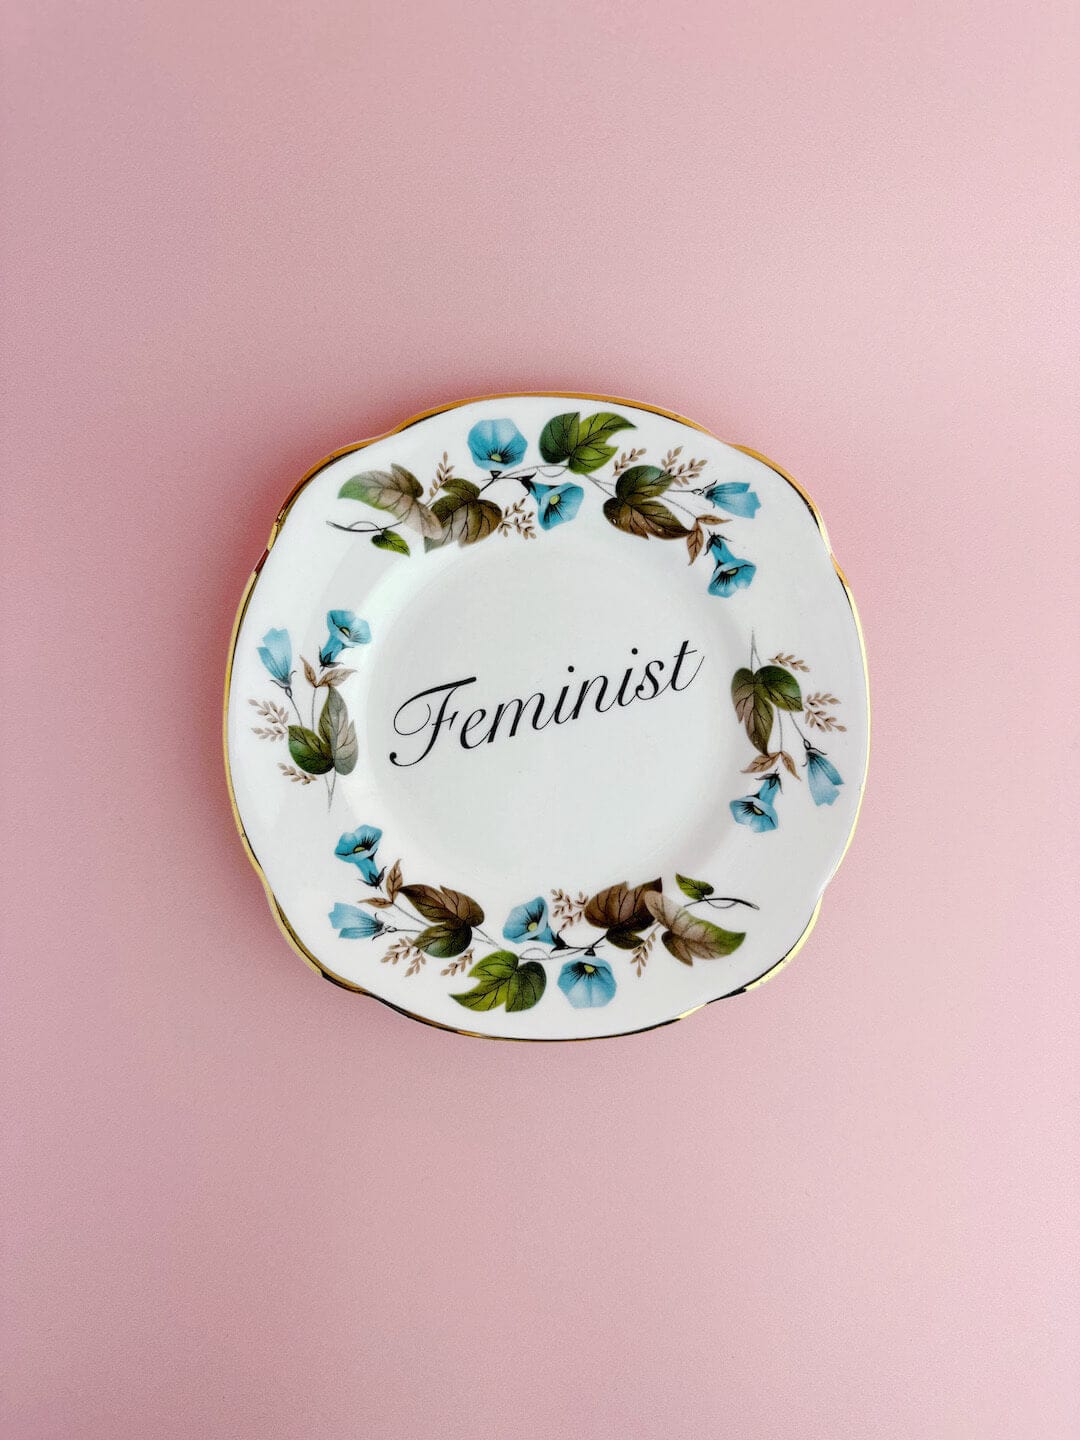 Beau & Badger Ceramics #99 Decorative Wall Plate - Feminist (multiple designs)